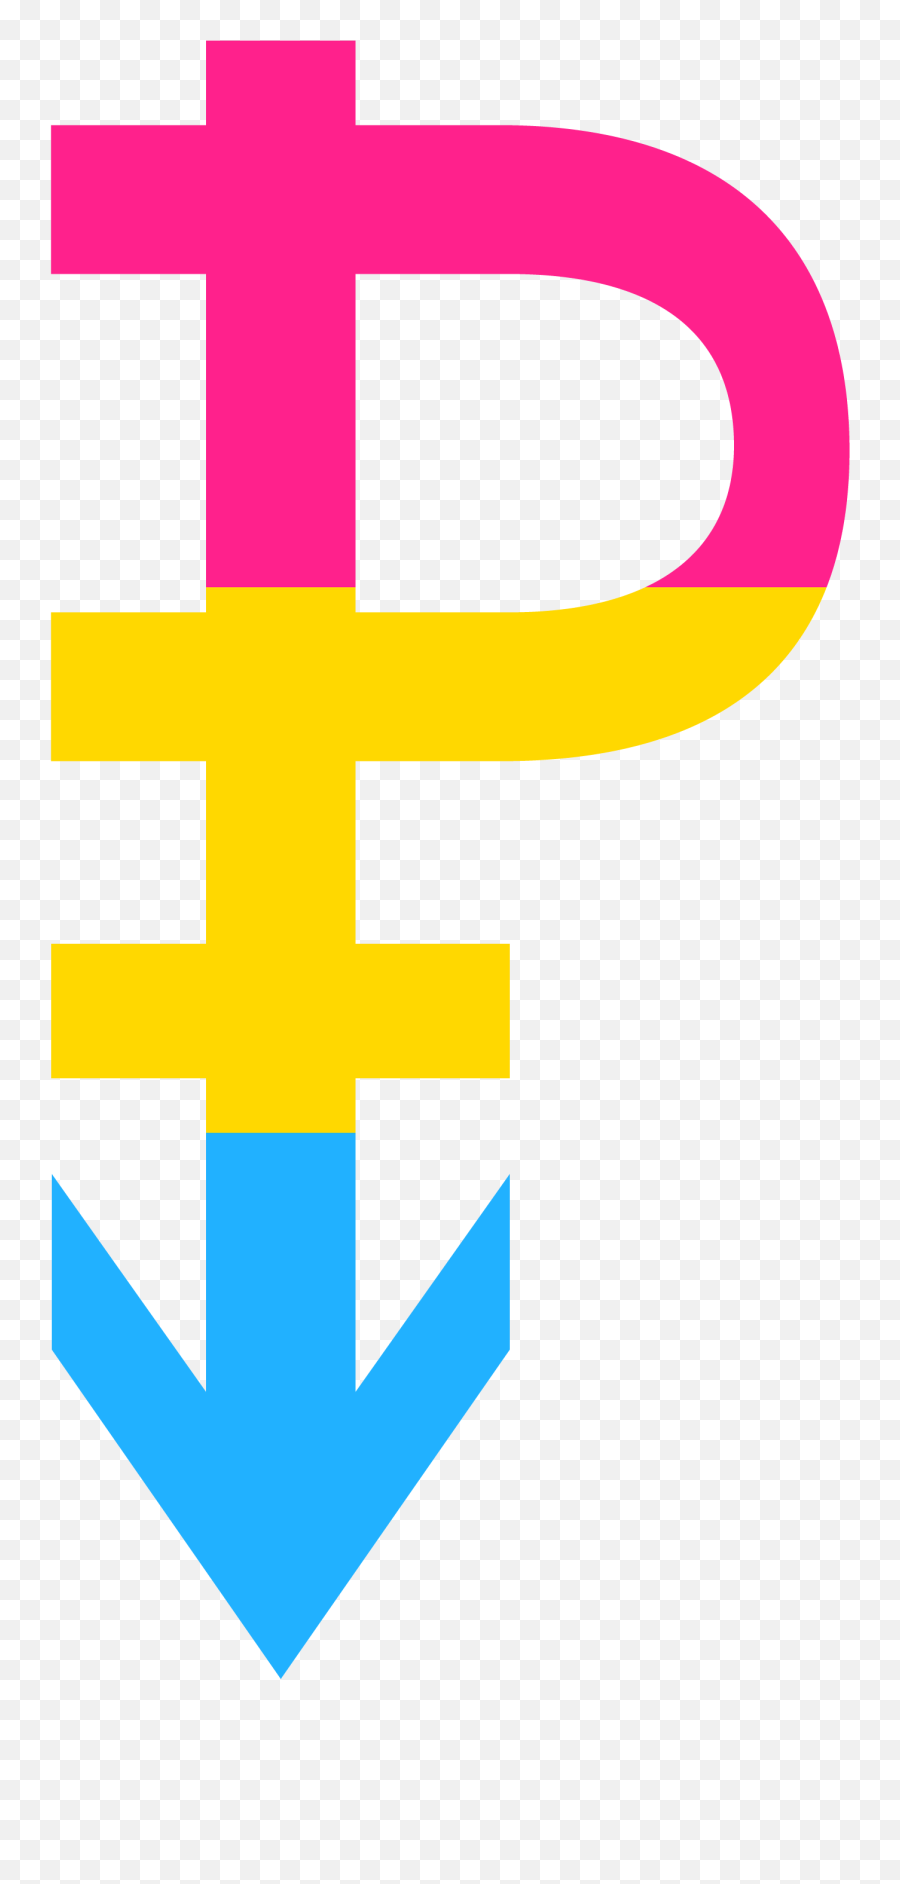 Trans And Pan Flag Wallpapers - Wallpaper Cave Pansexual Sign Emoji,Trans Flag Emoji